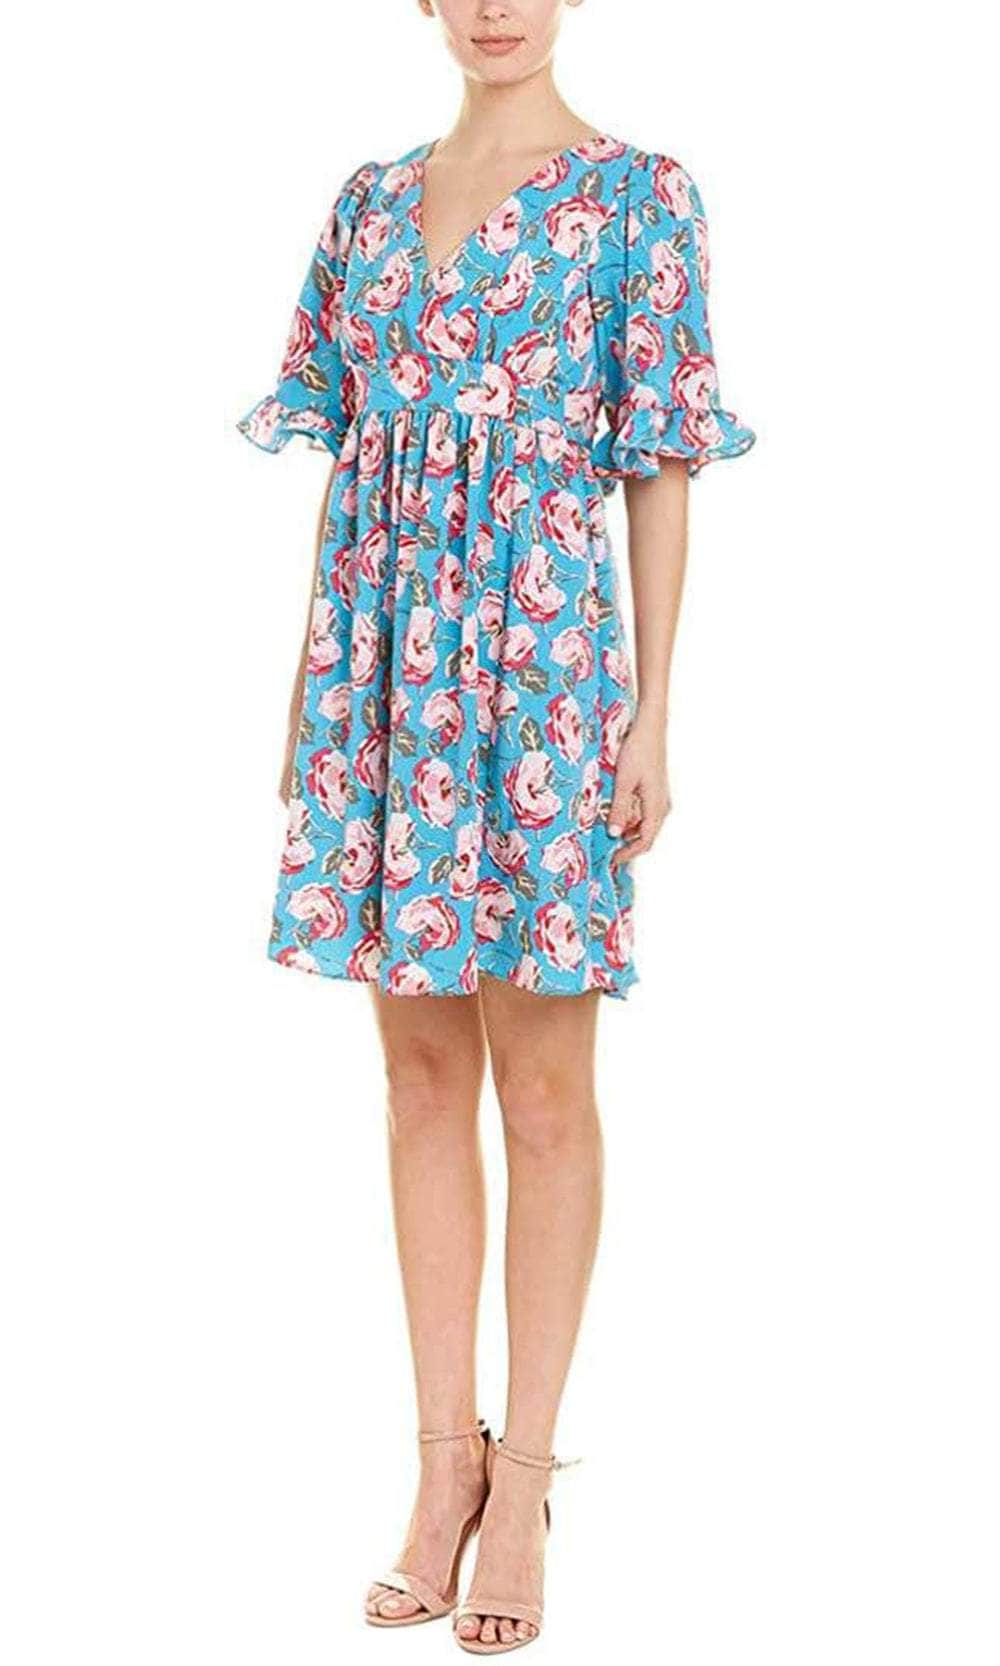 Betsey Johnson FP01W26 - V-Neck Bell Short Sleeved Floral Short Dress
